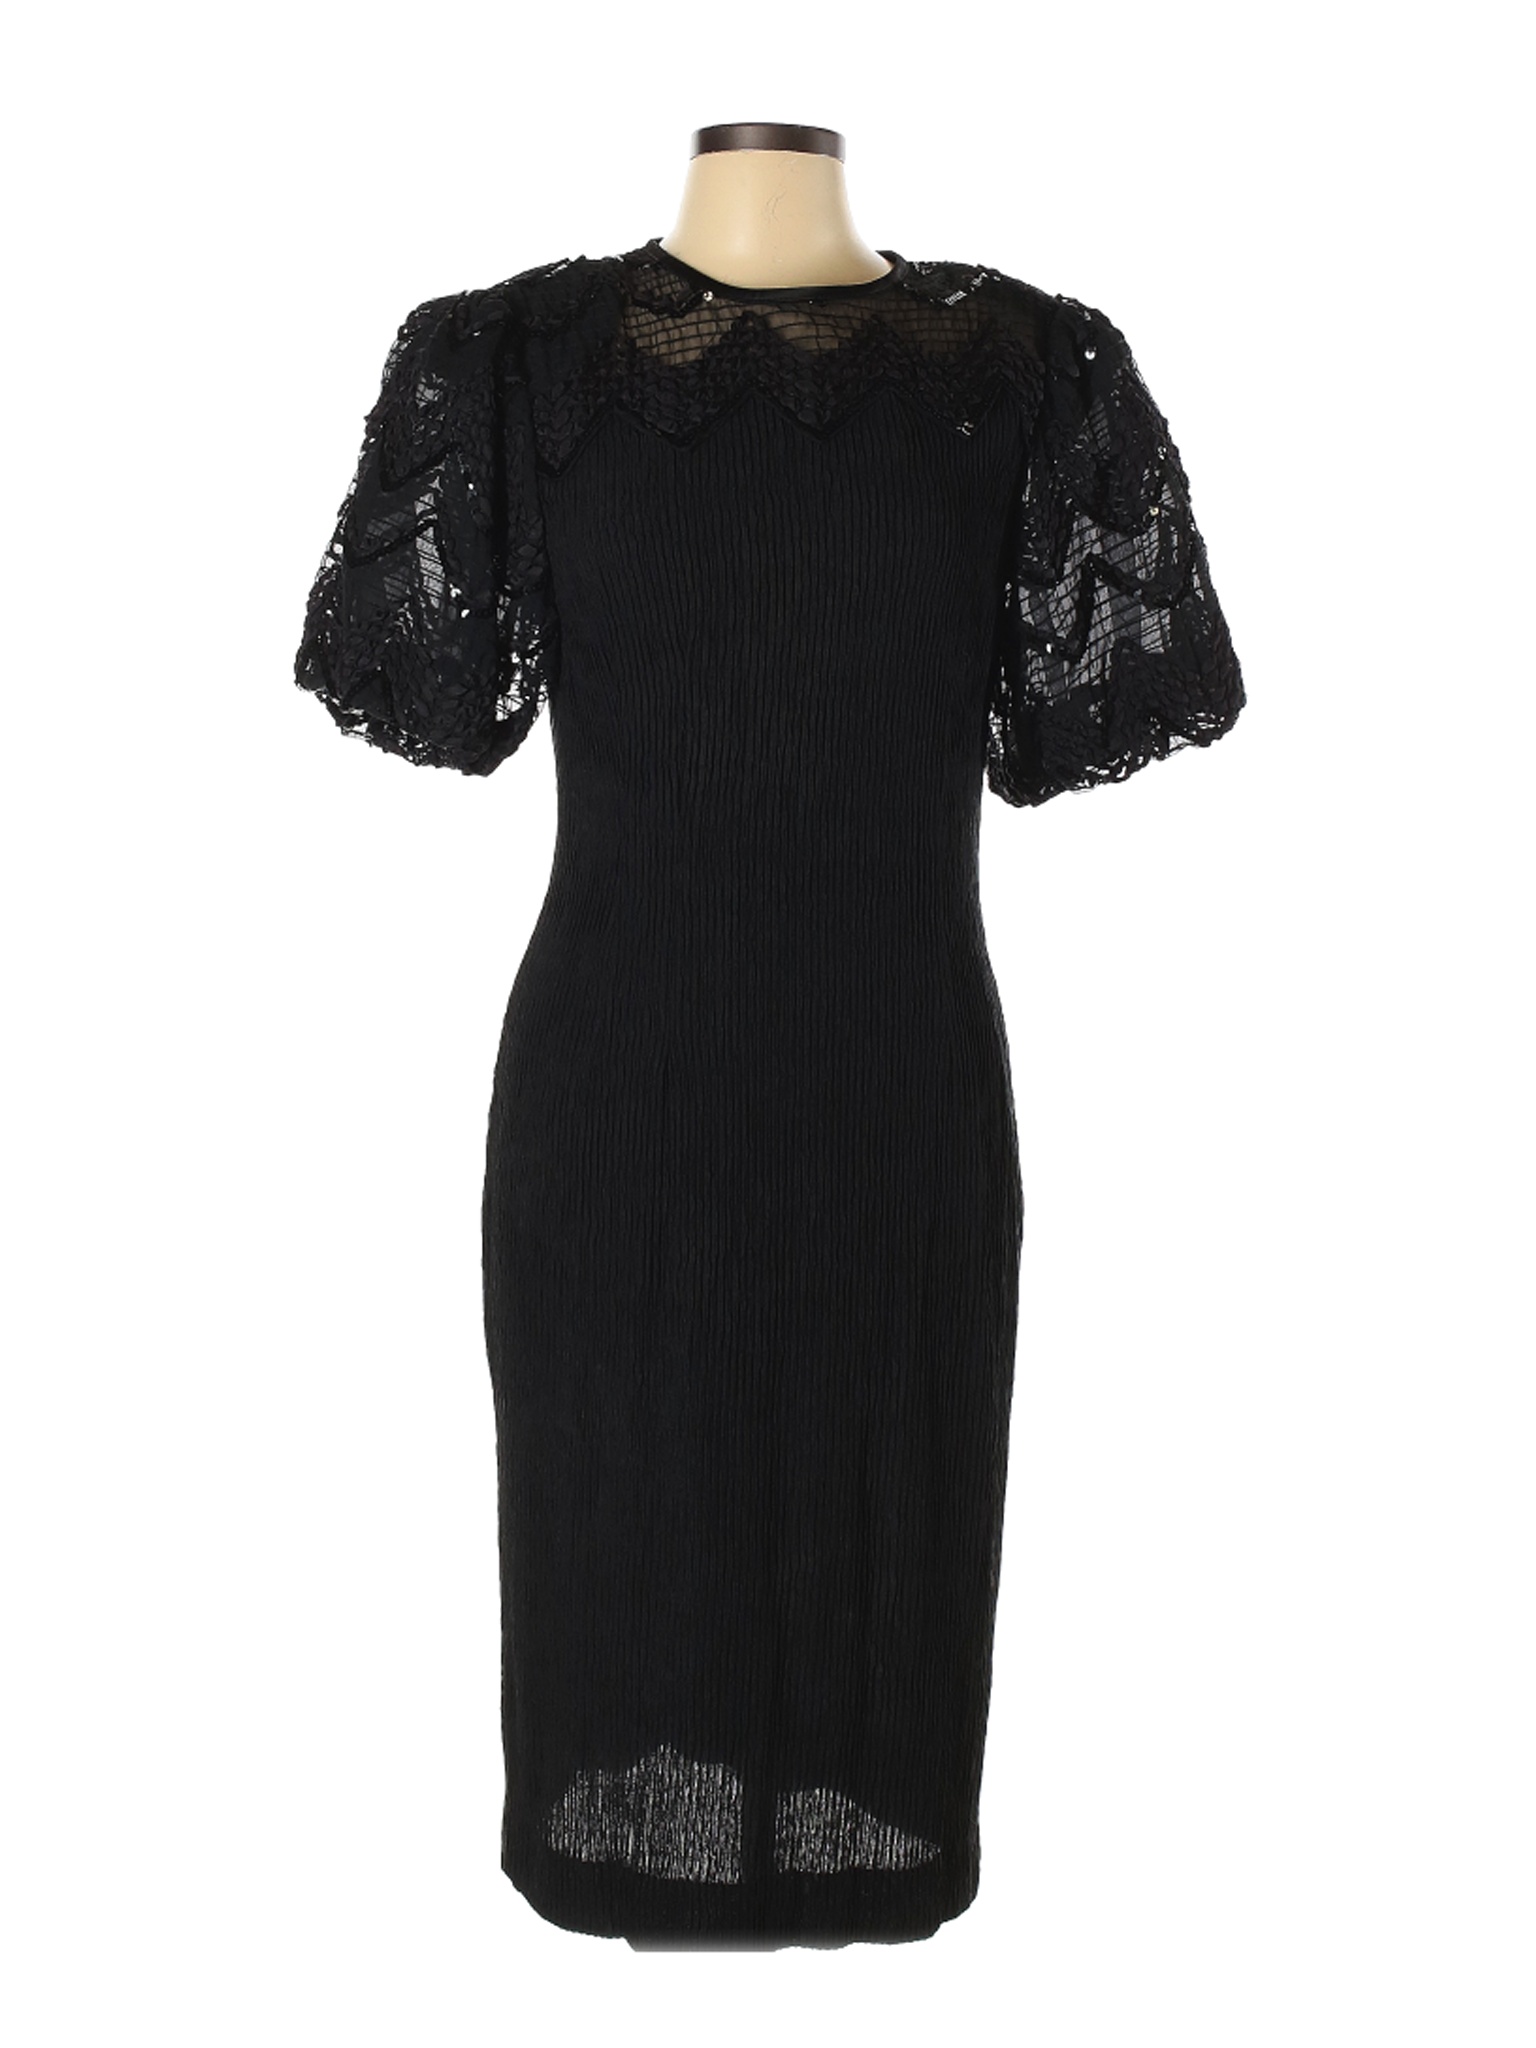 Leslie Fay Women Black Cocktail Dress 12 | eBay